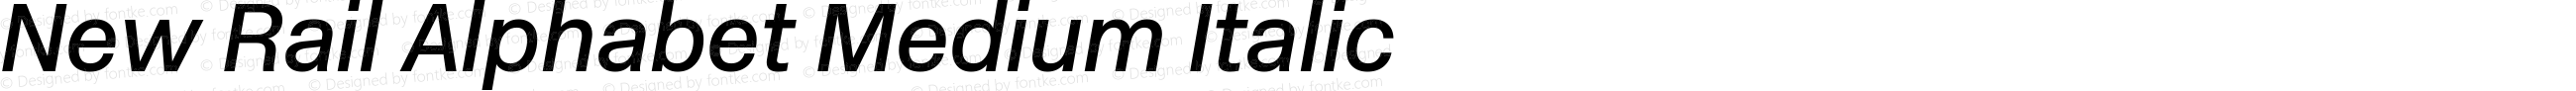 New Rail Alphabet Medium Italic